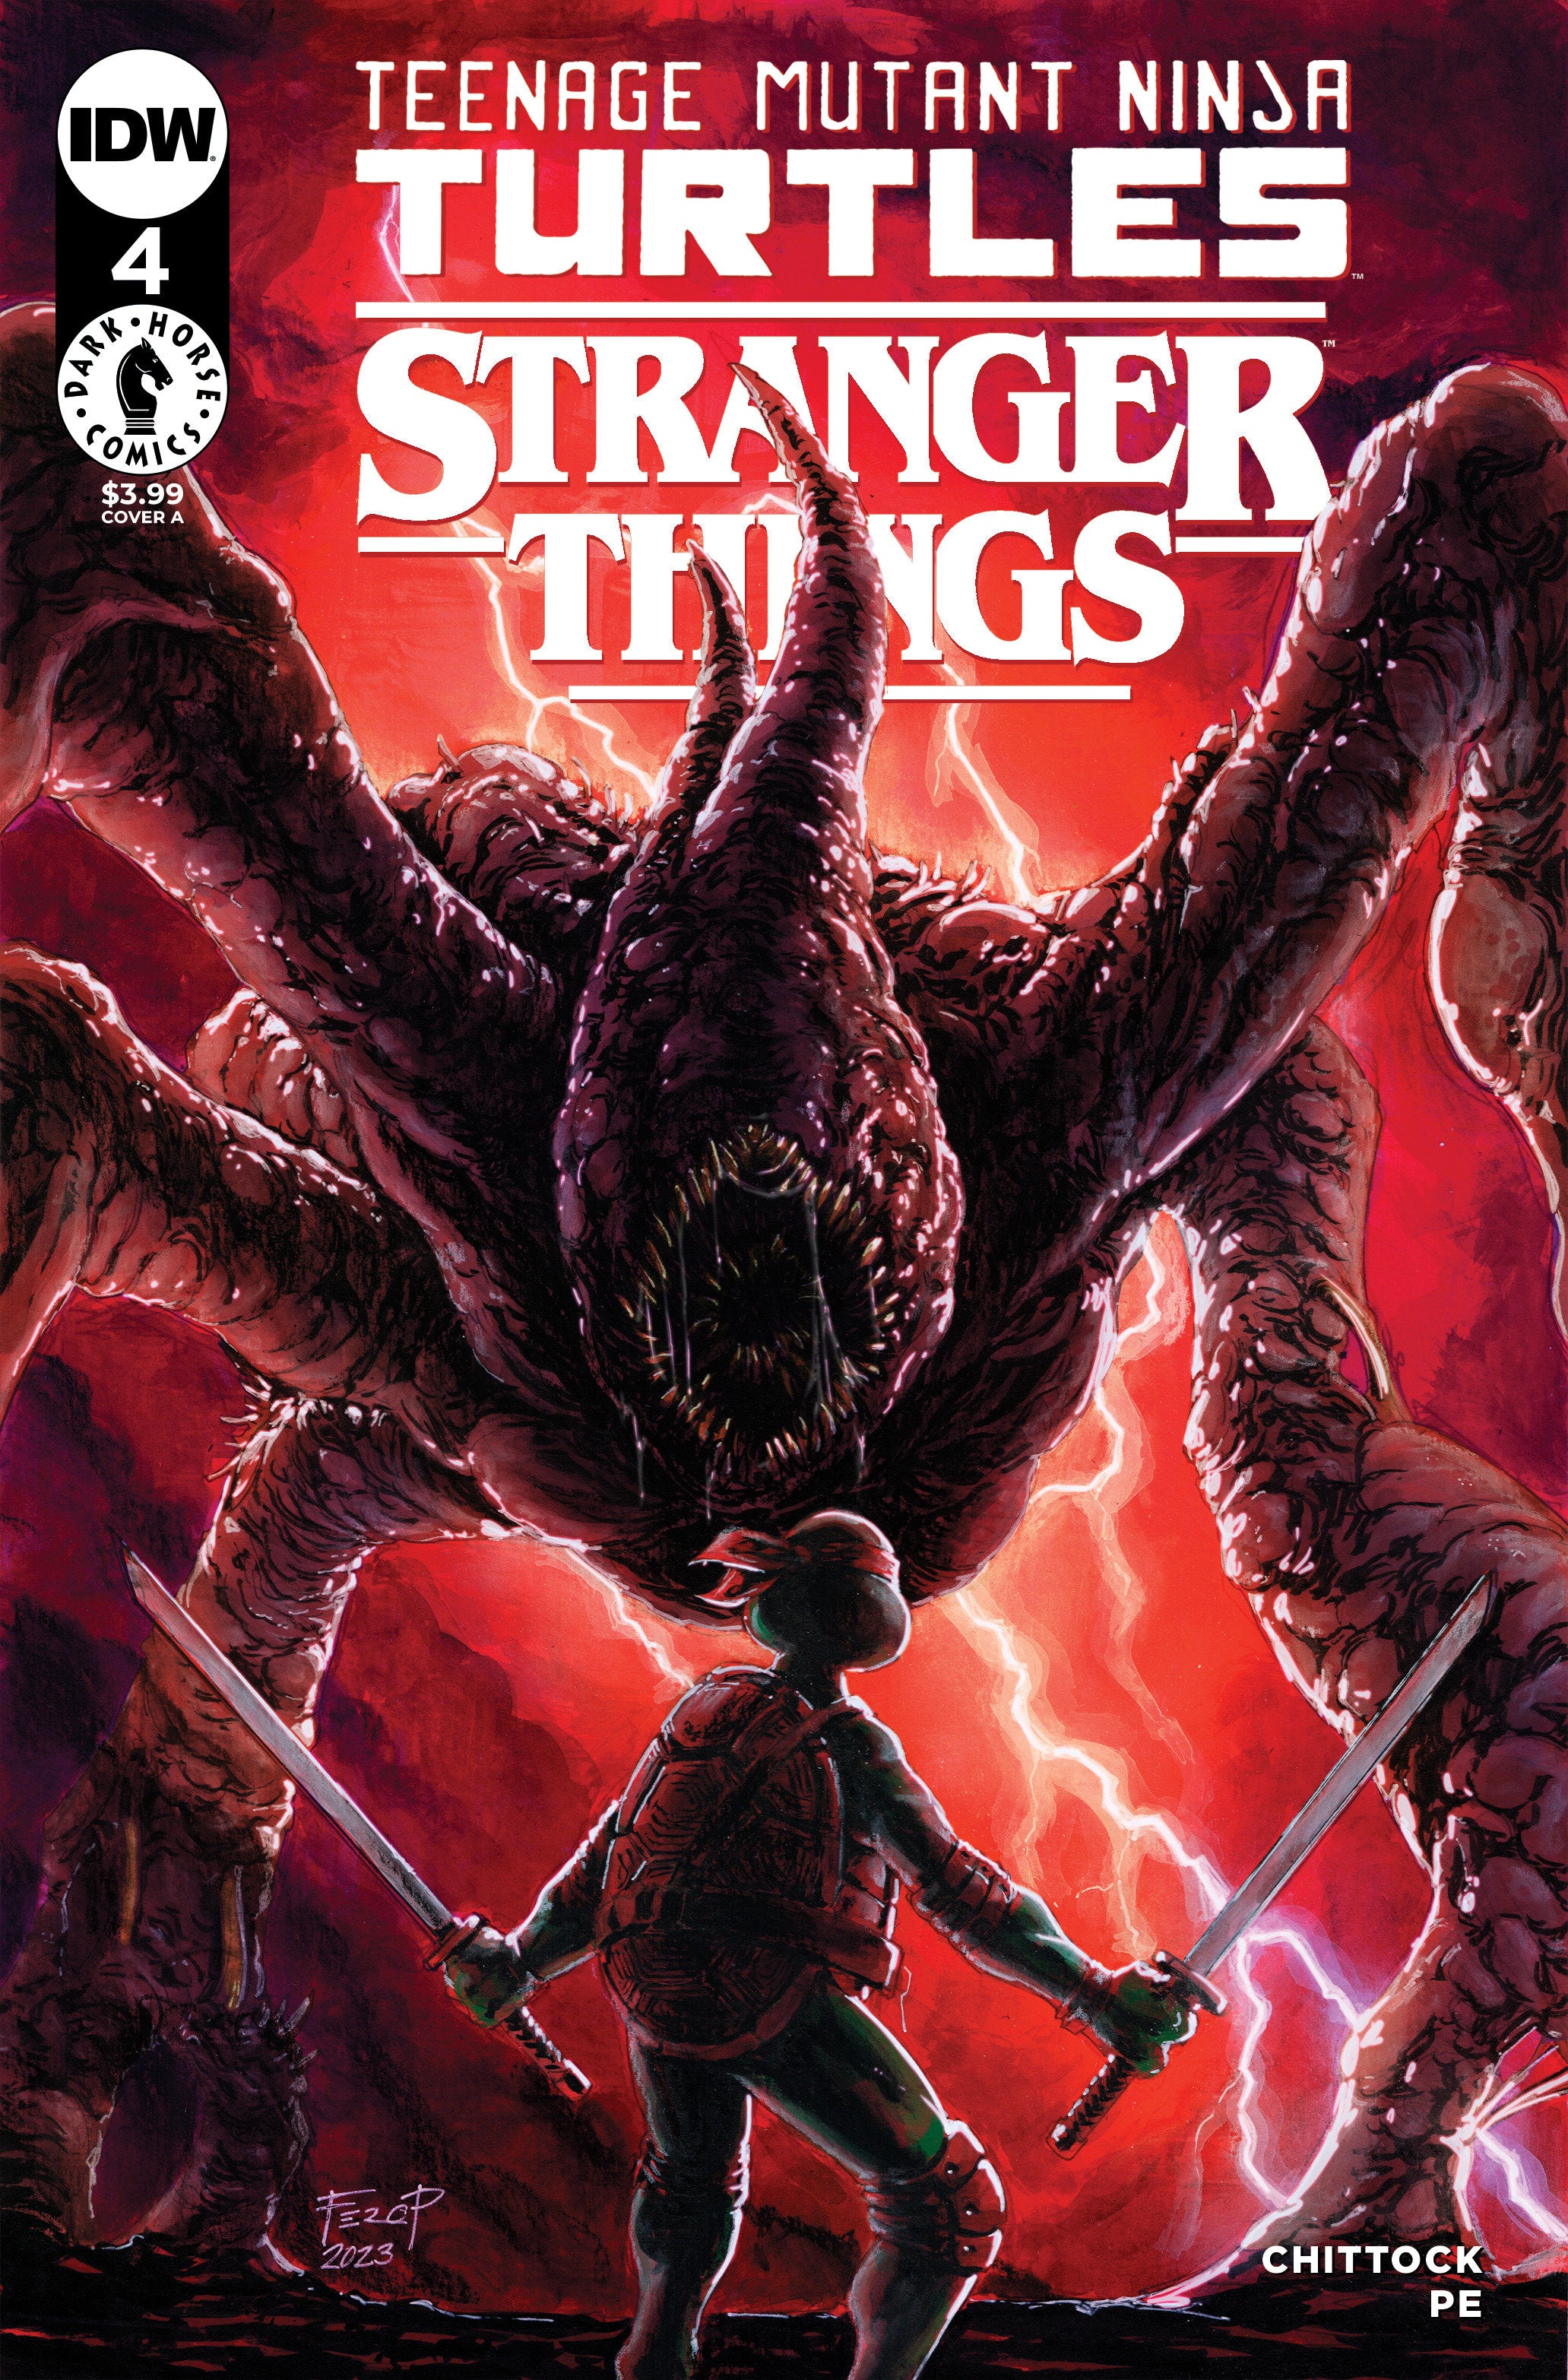 Teenage Mutant Ninja Turtles X Stranger Things #4 Cover A (Pe) | Game Master's Emporium (The New GME)